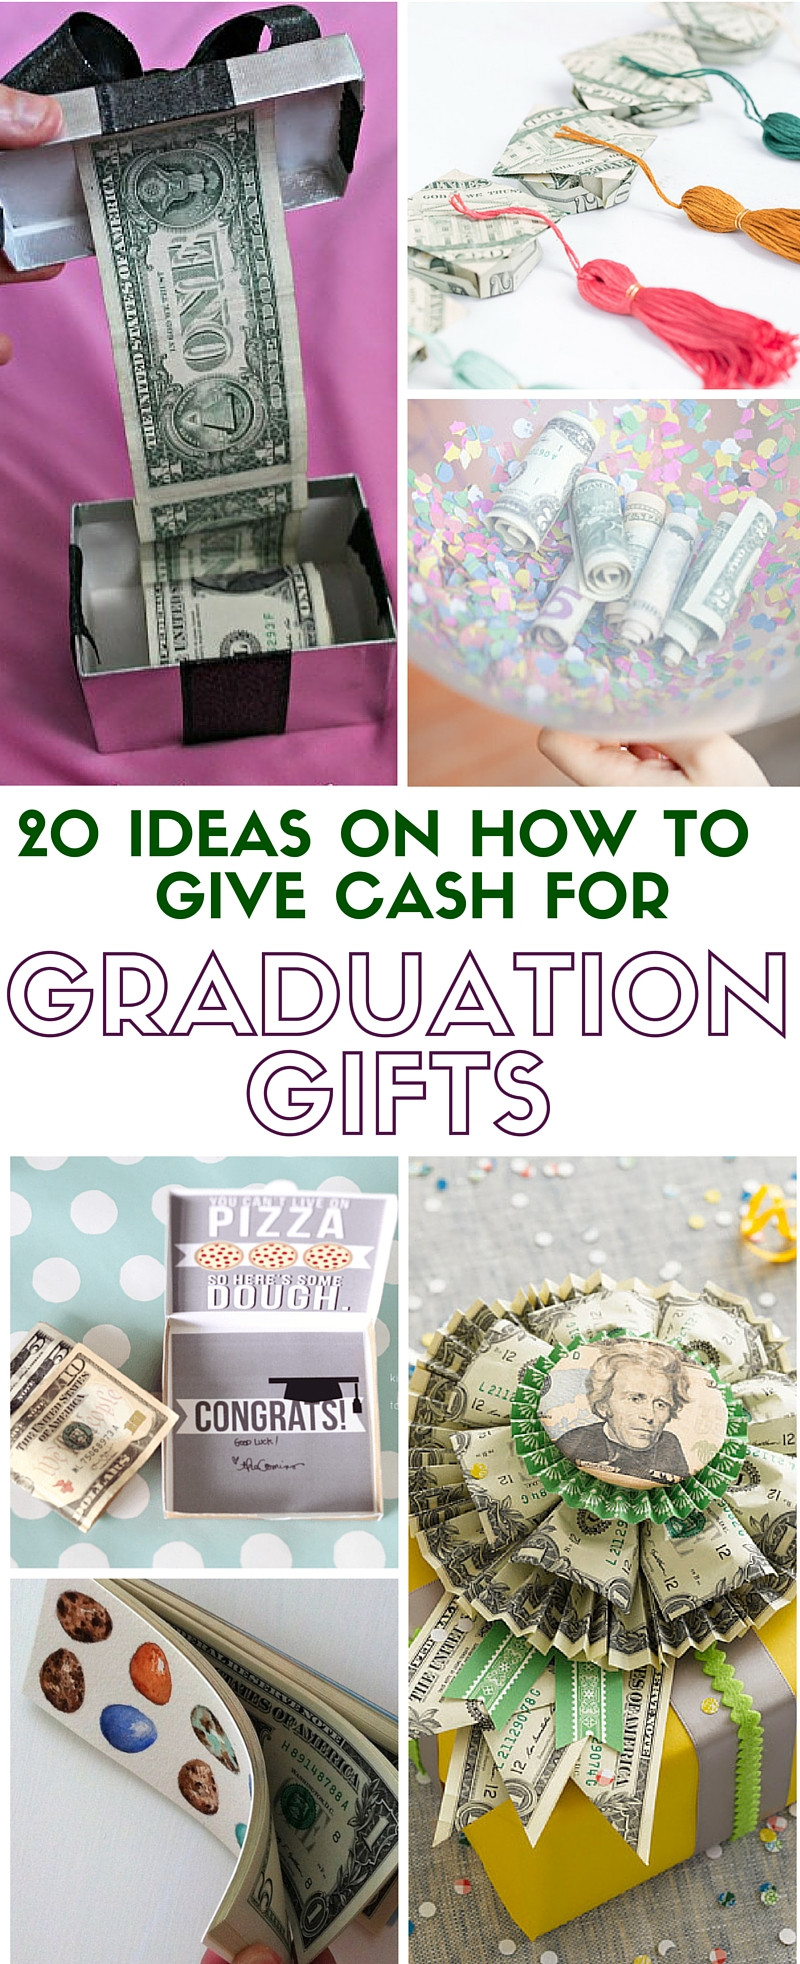 Best Graduation Gift Ideas
 31 Back To School Teacher Gift Ideas The Crafty Blog Stalker